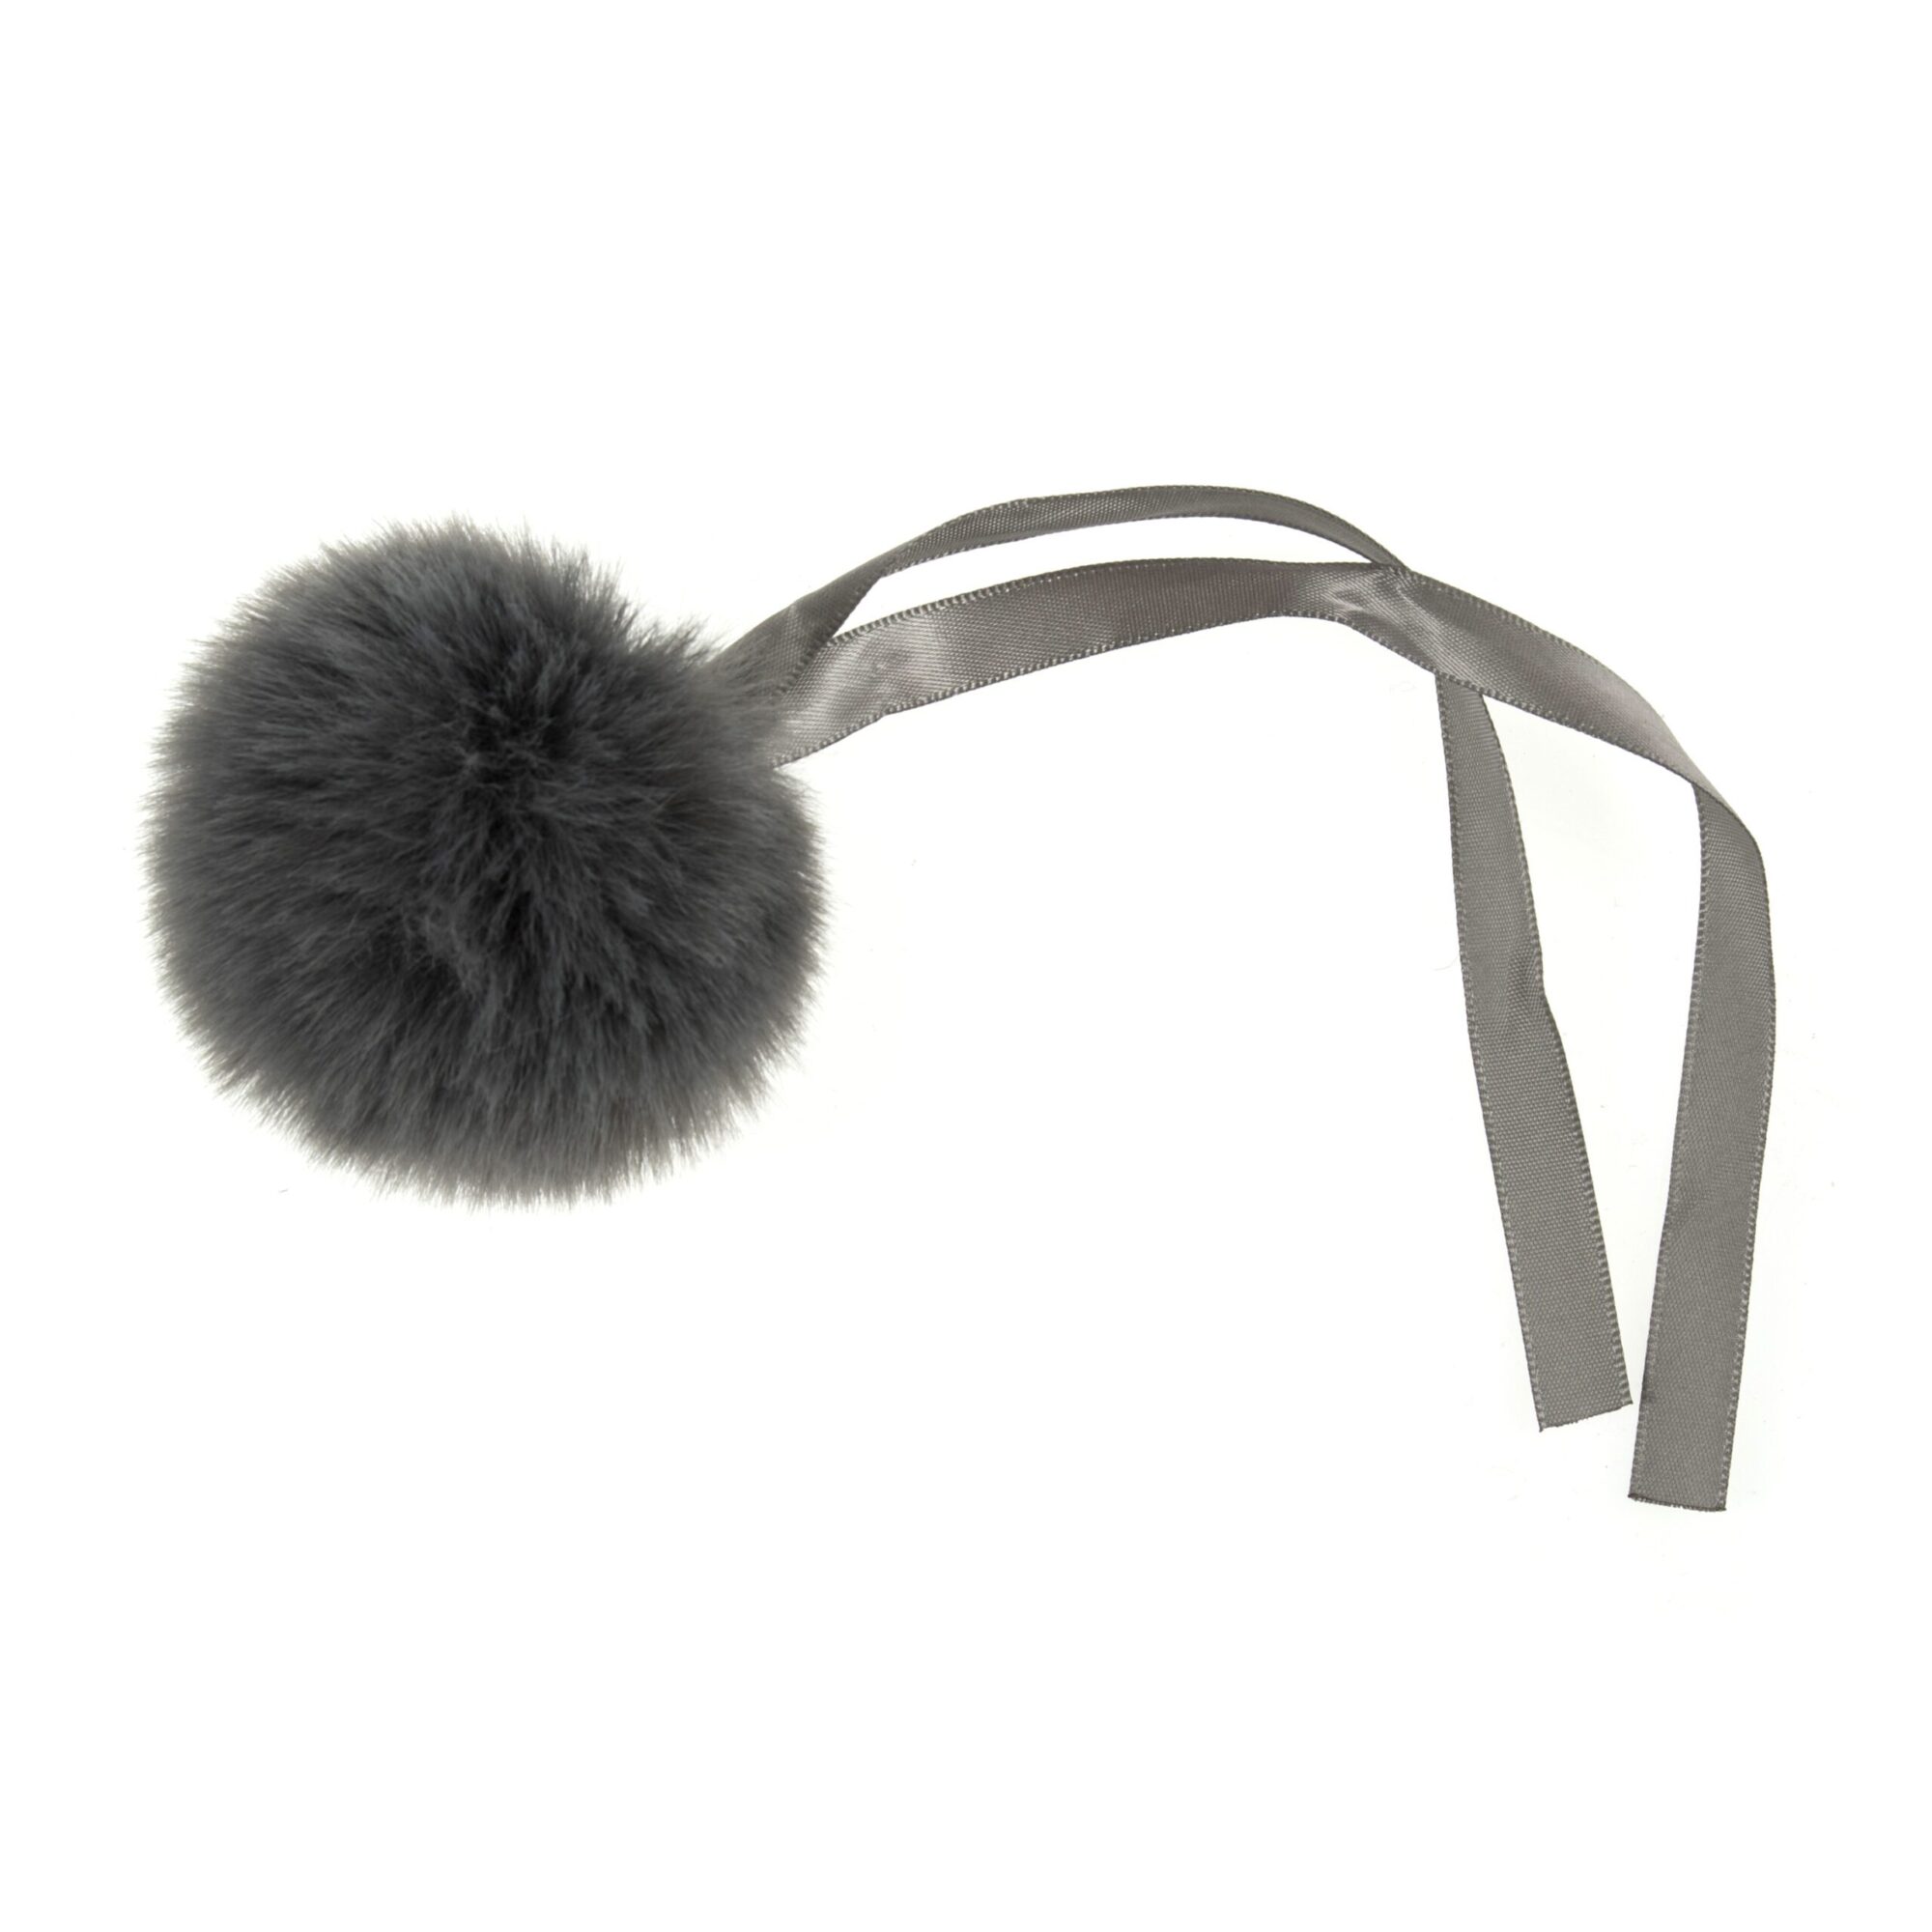 Medium Faux Fur Pom Pom 6cm - Grey product image